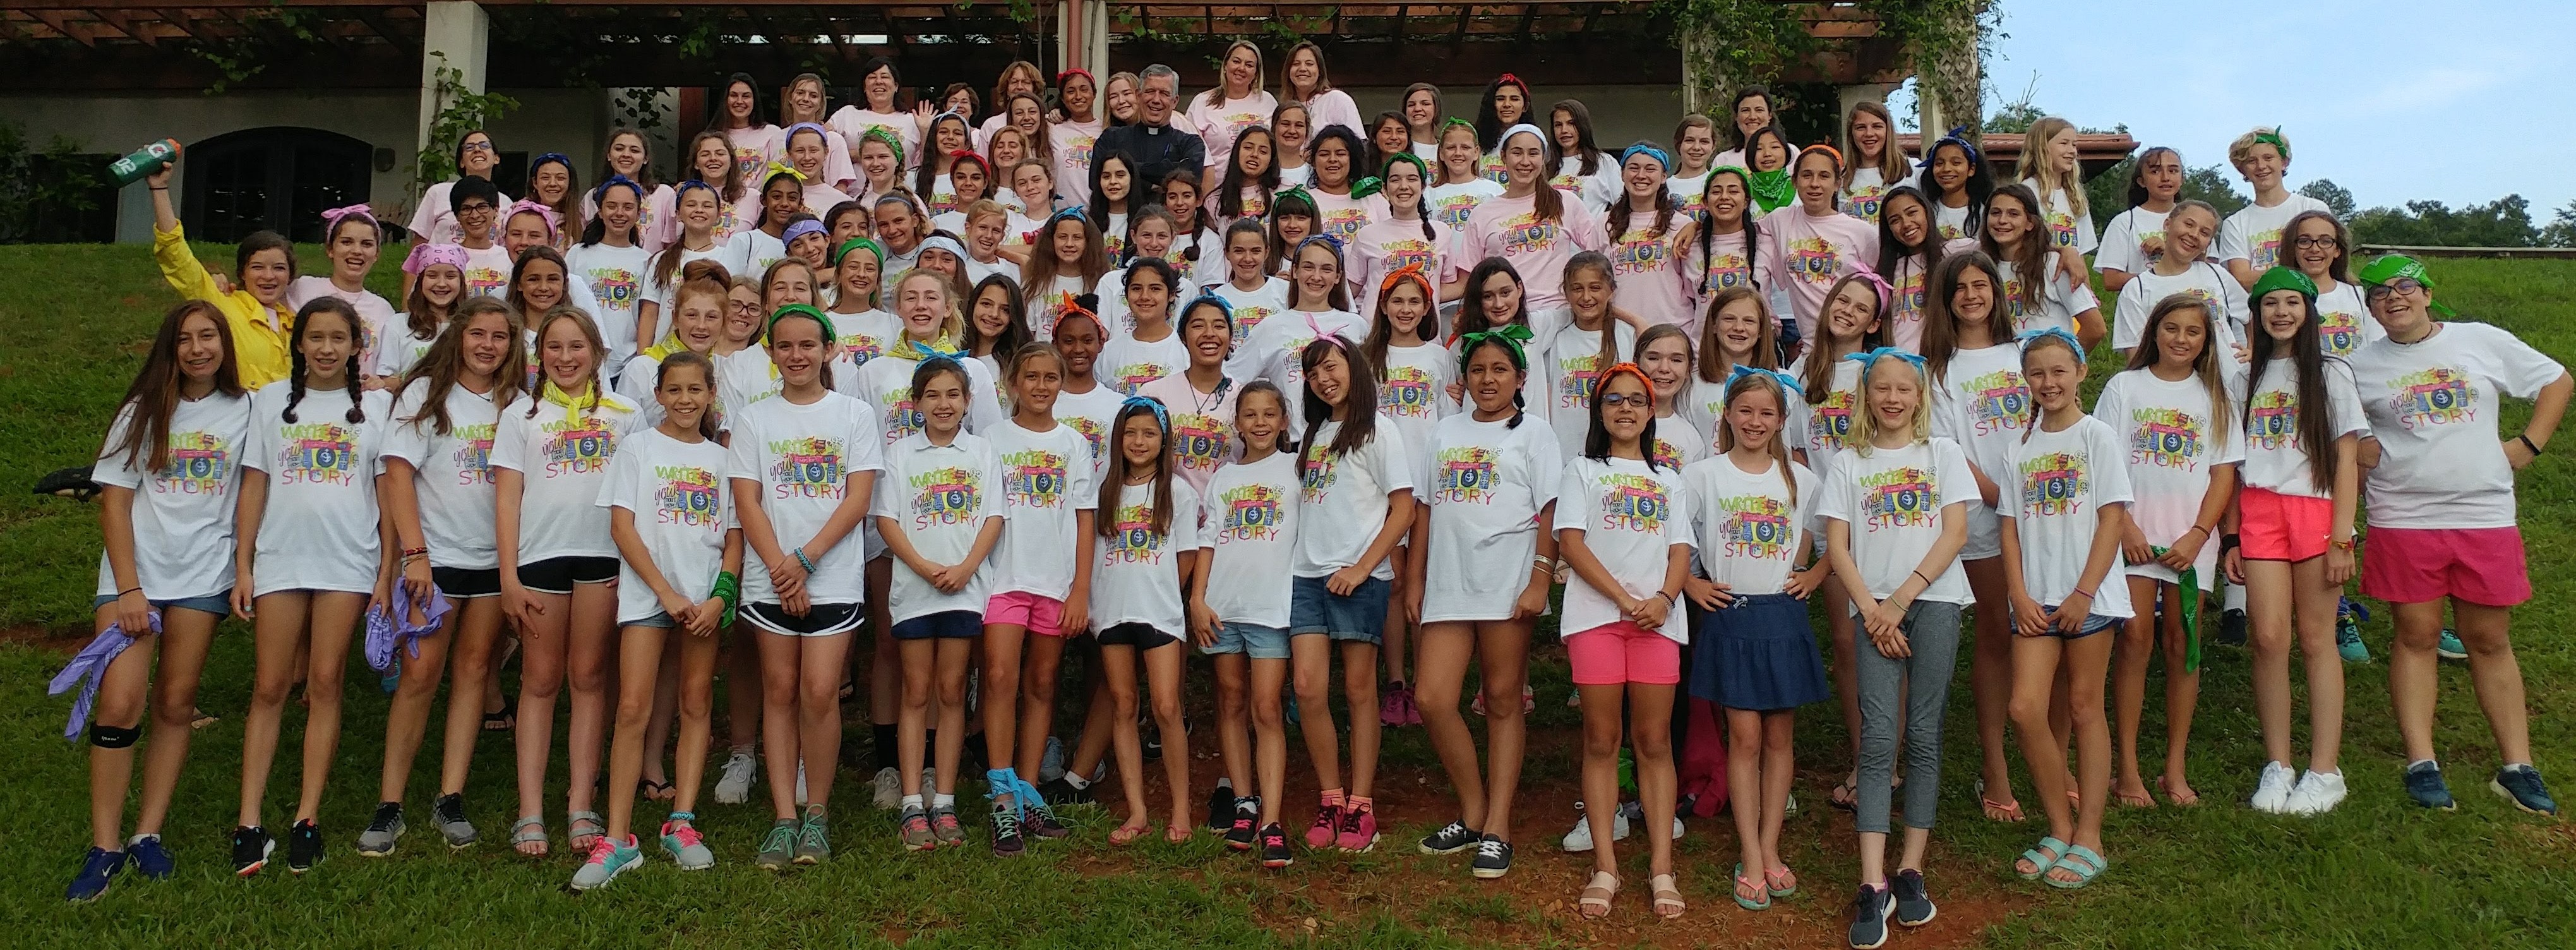 Atlanta Girls' Summer Camp - Challenge.